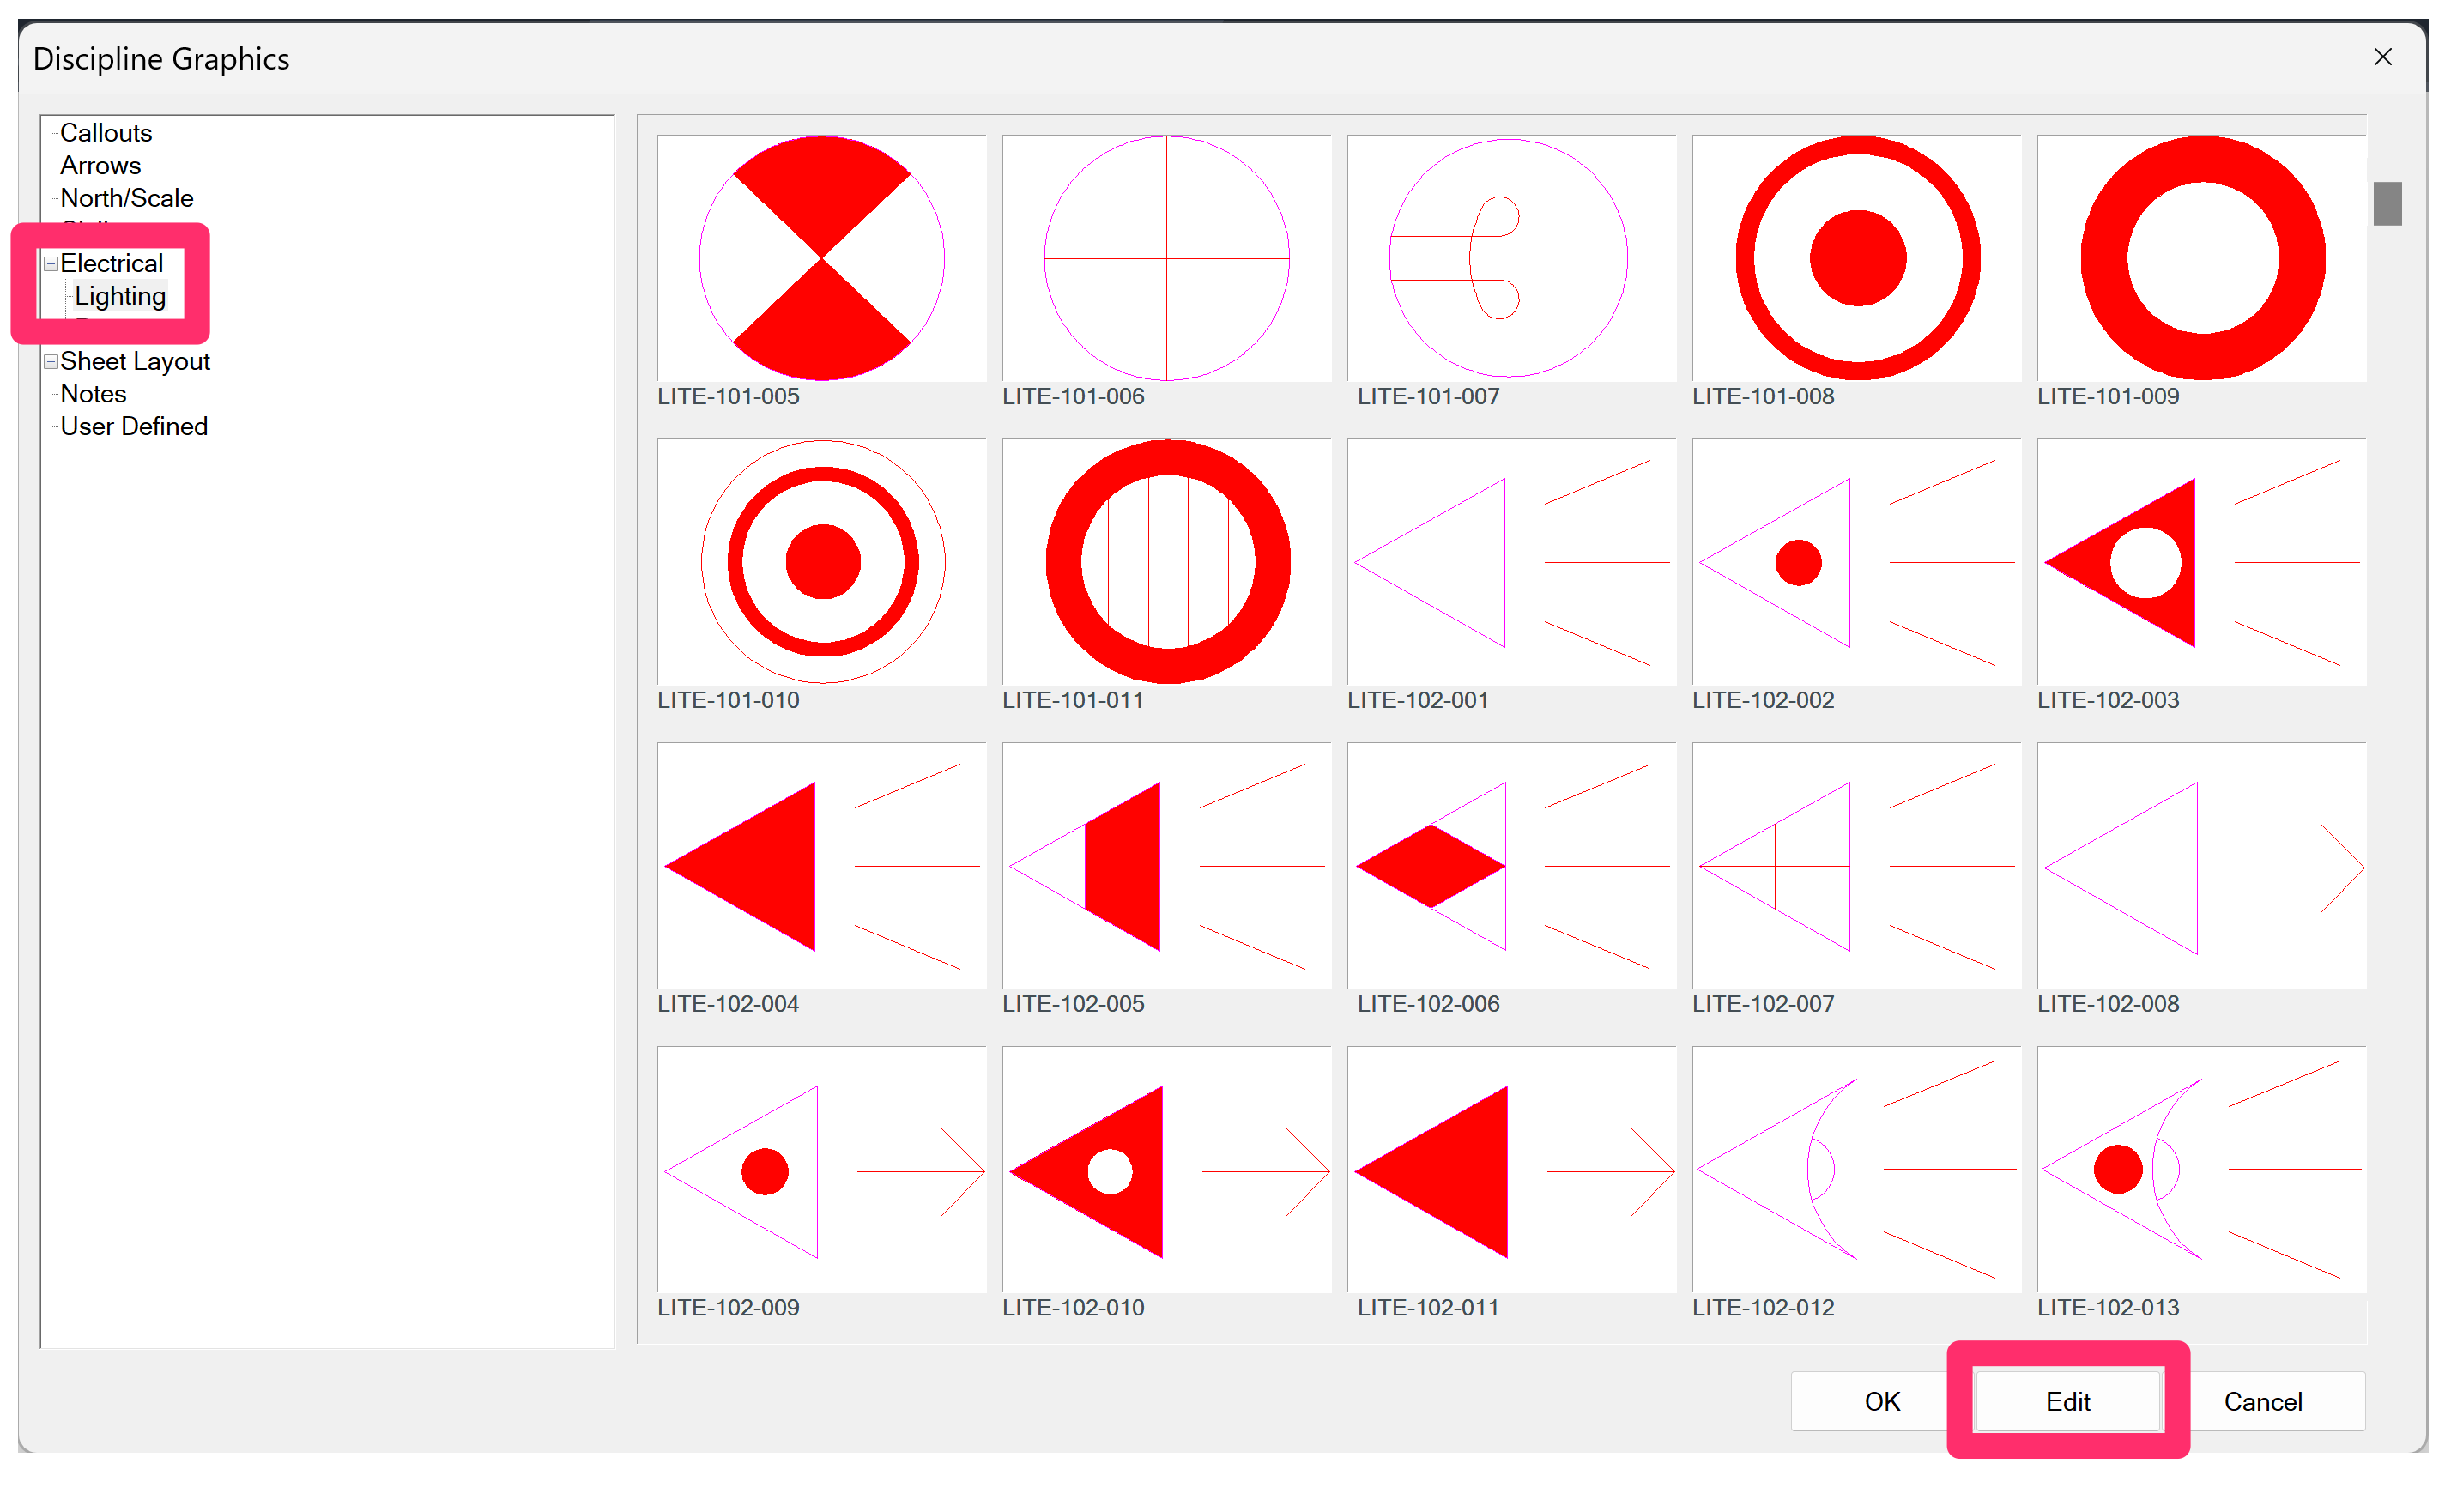 Discipline Graphics dialog box showing lighting symbols